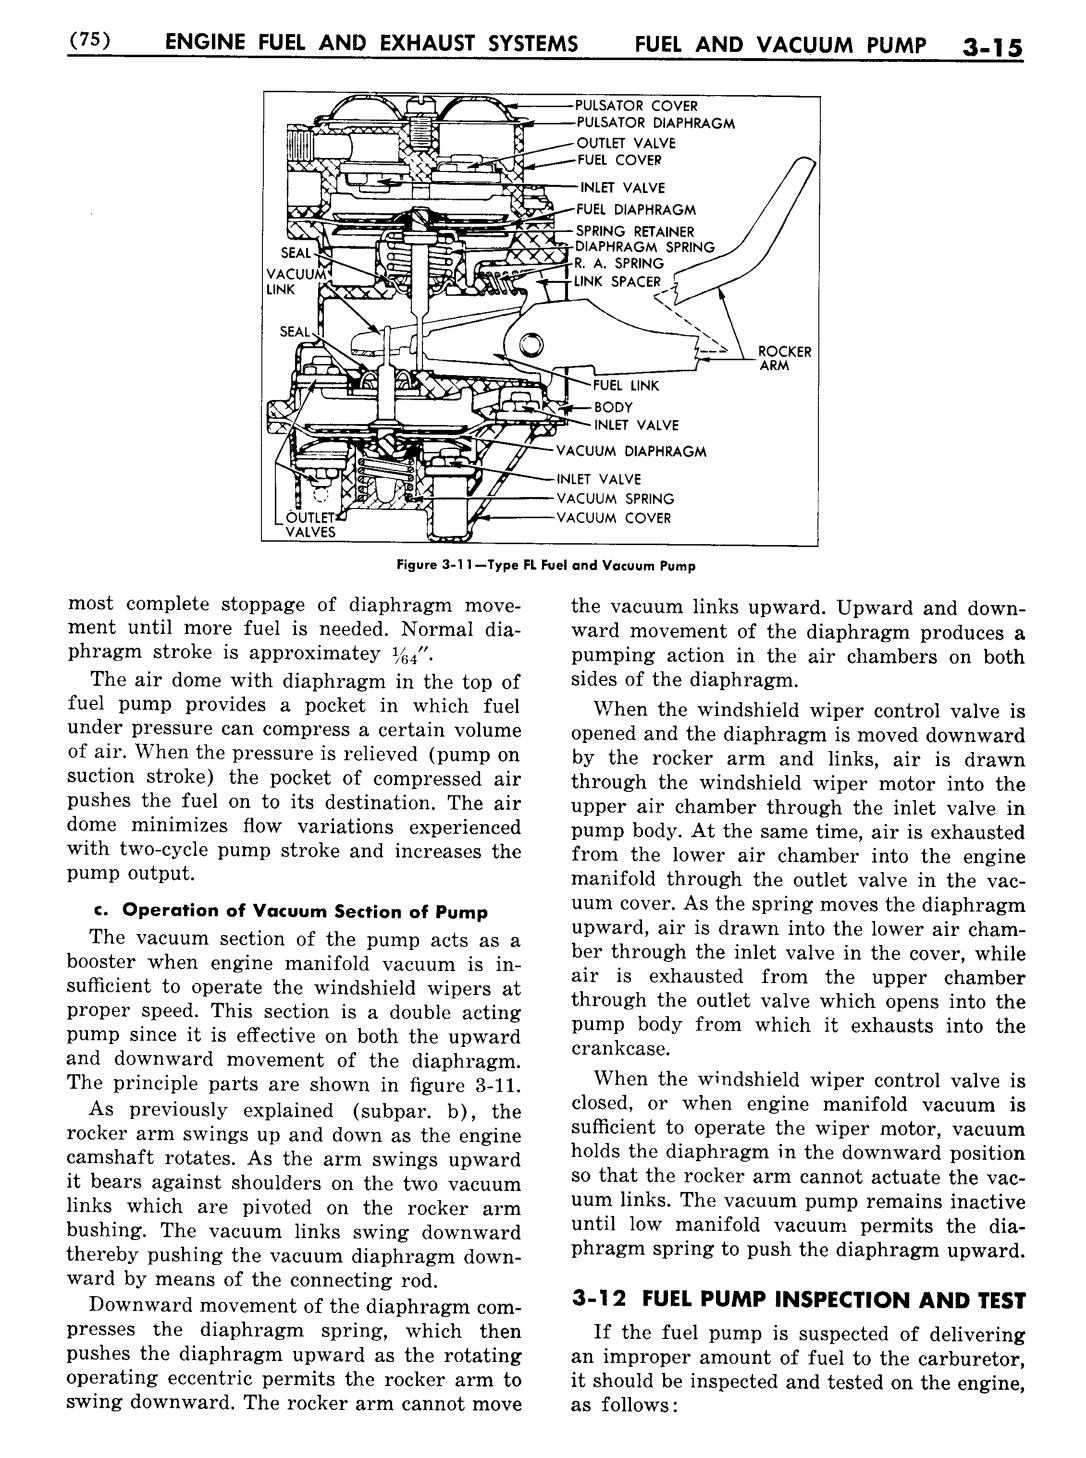 n_04 1956 Buick Shop Manual - Engine Fuel & Exhaust-015-015.jpg